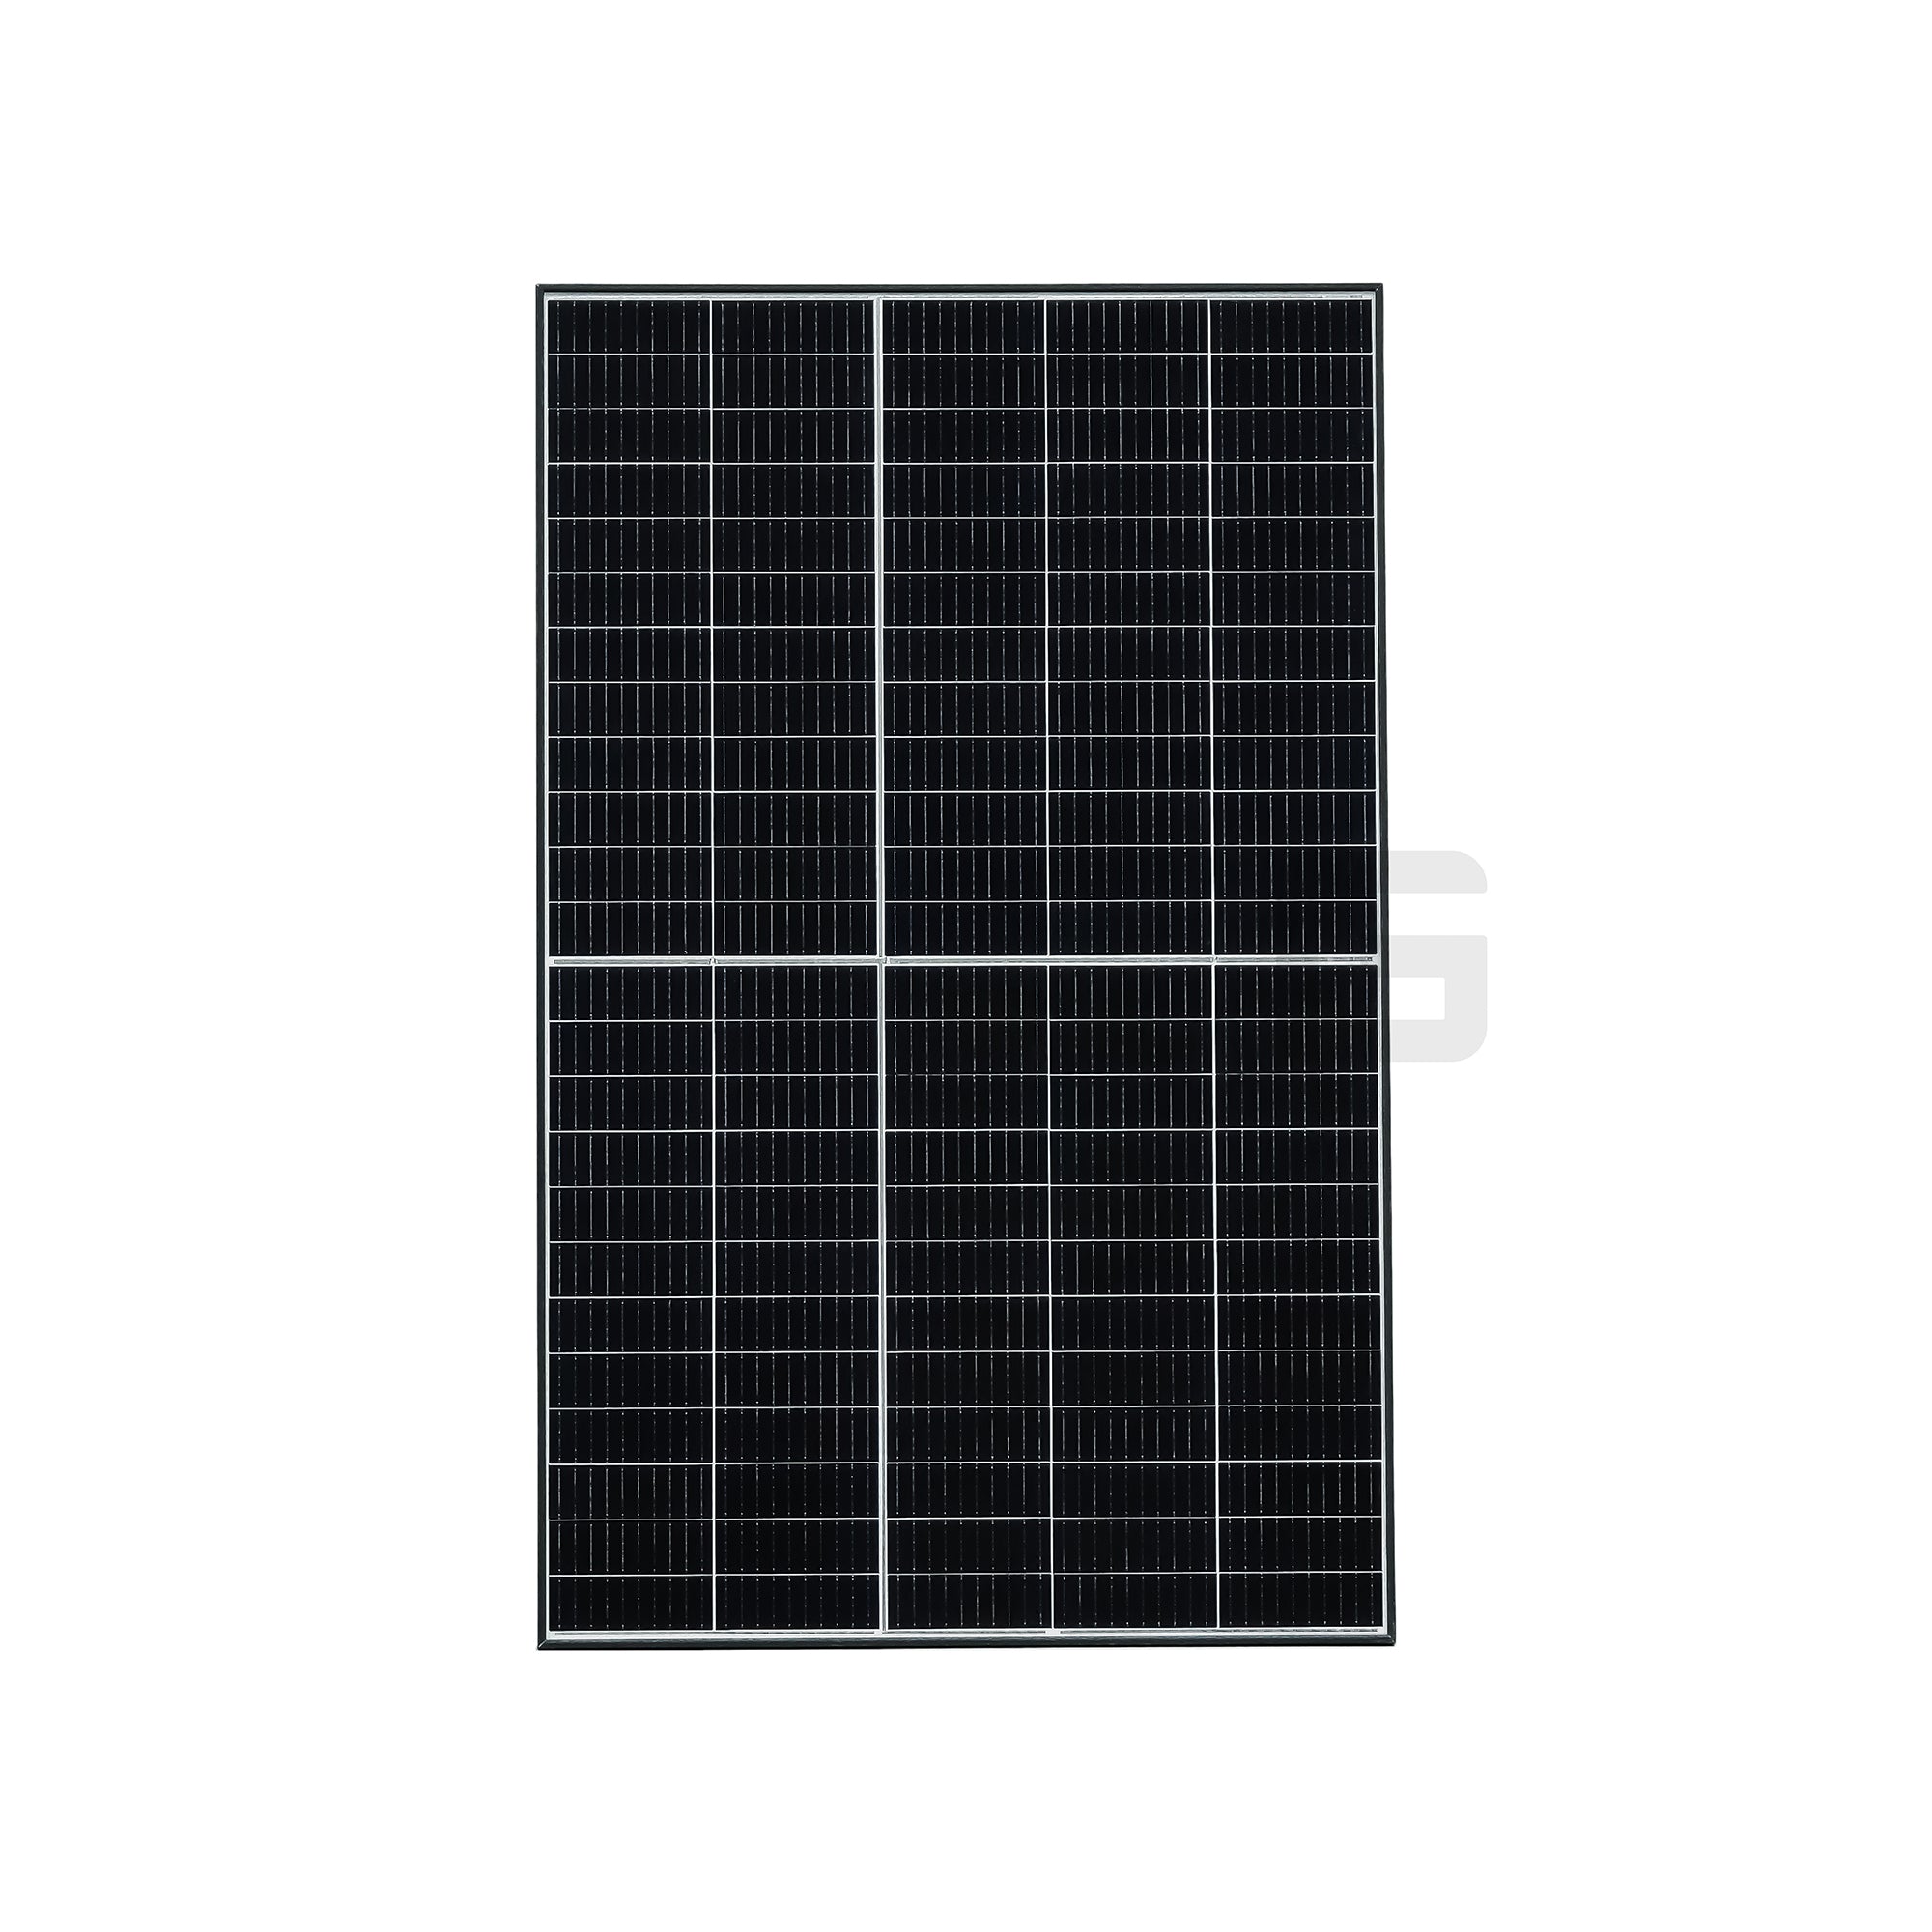 Trina VERTEX S 390w PERC Mono Half-Cell Solar panel